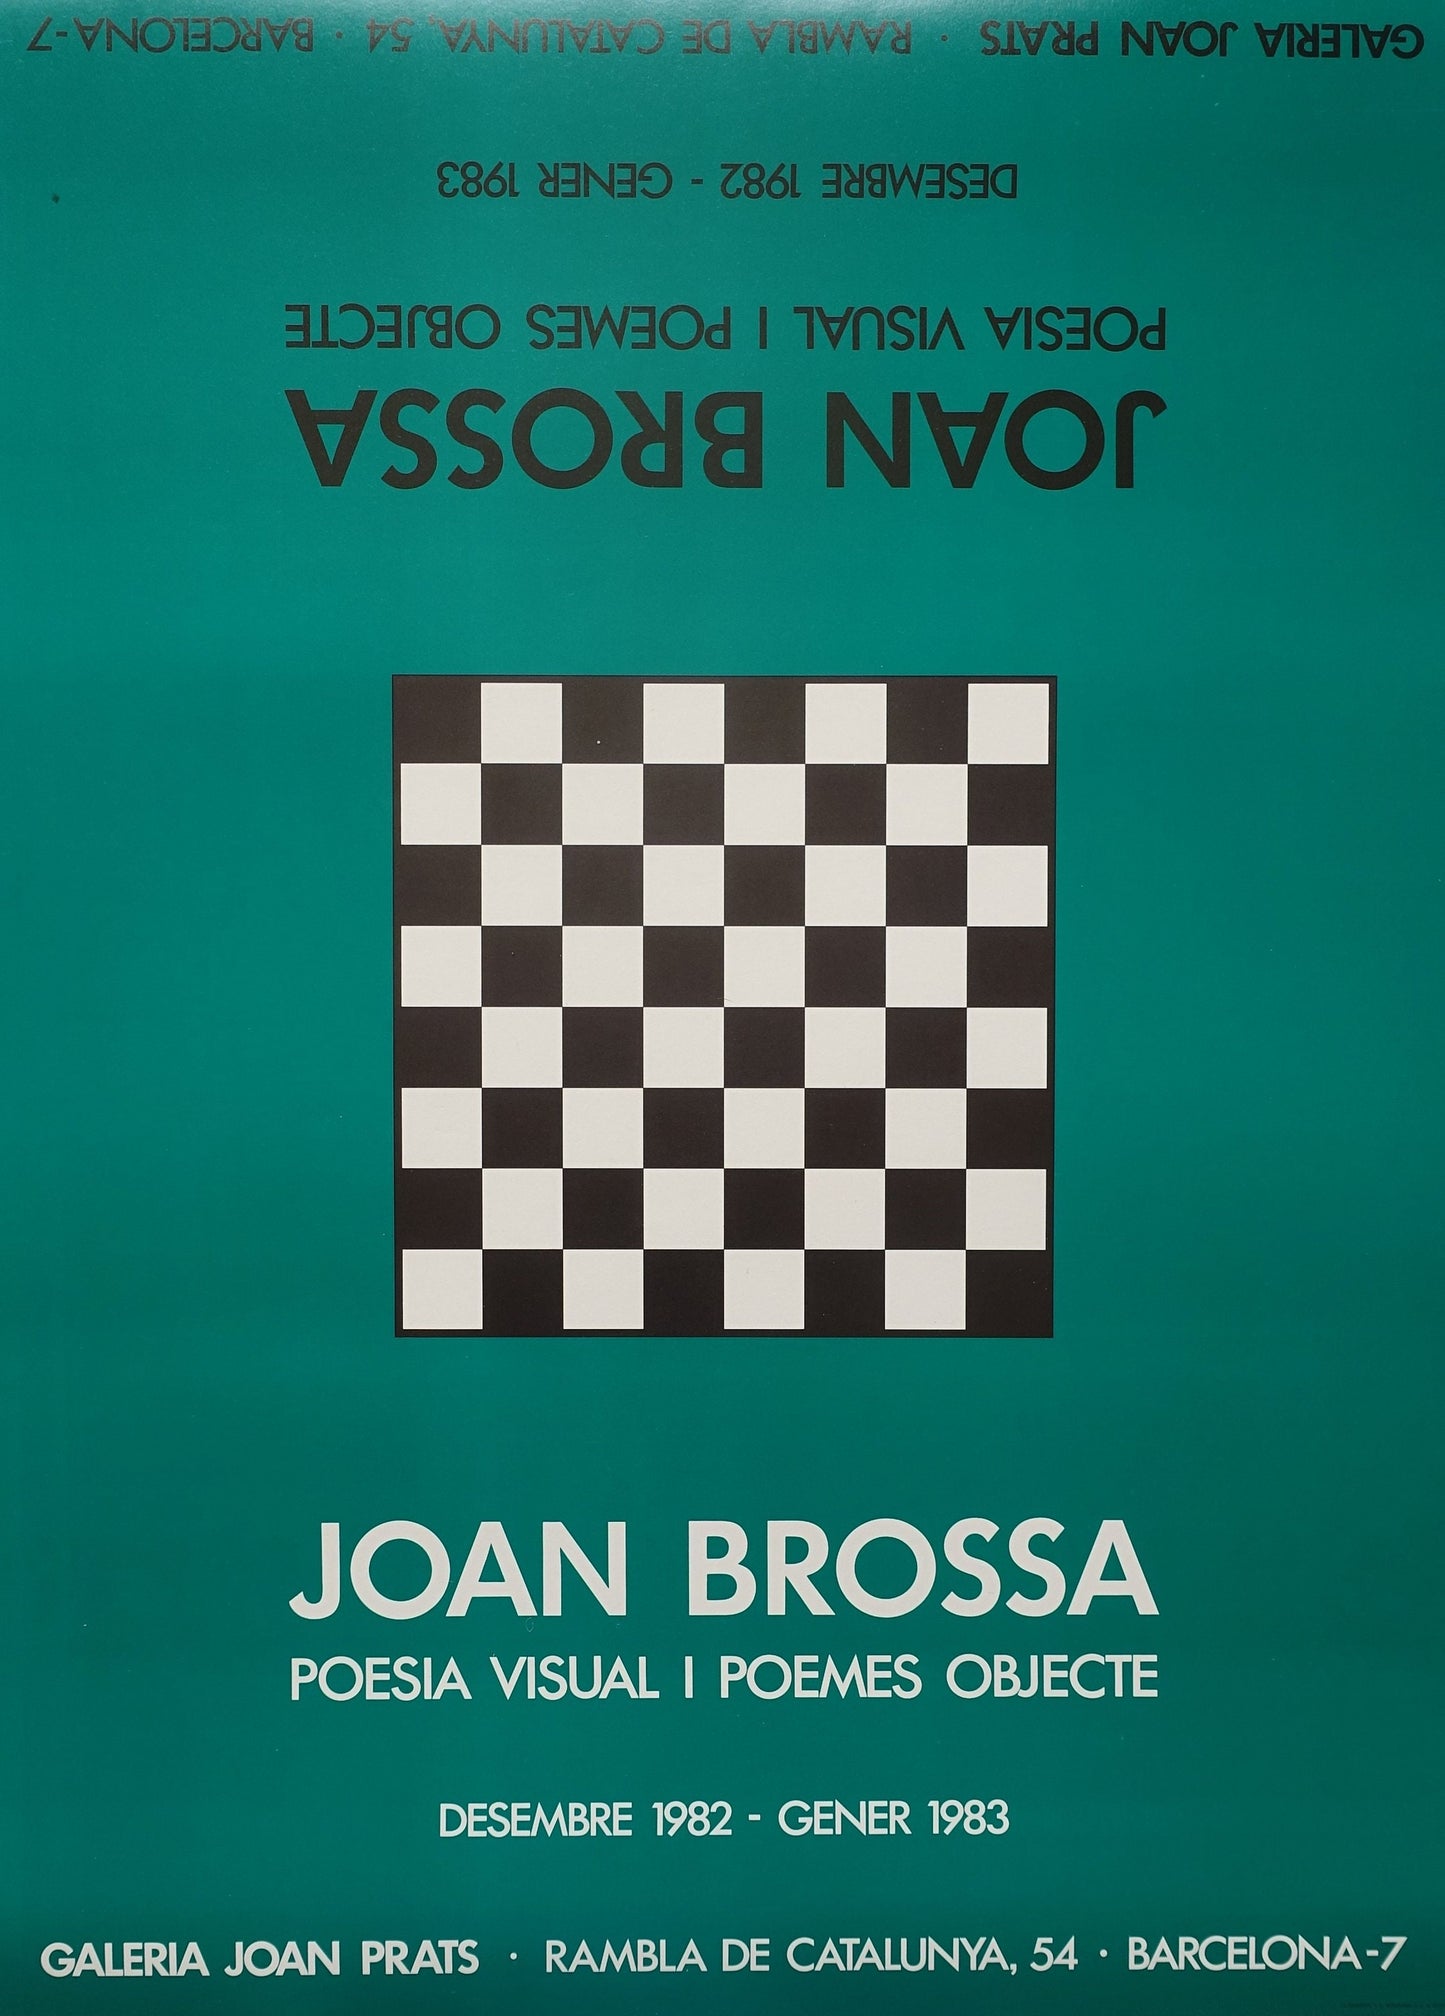 1983 Joan Brossa Spanish Exhibition Poster - Original Vintage Poster